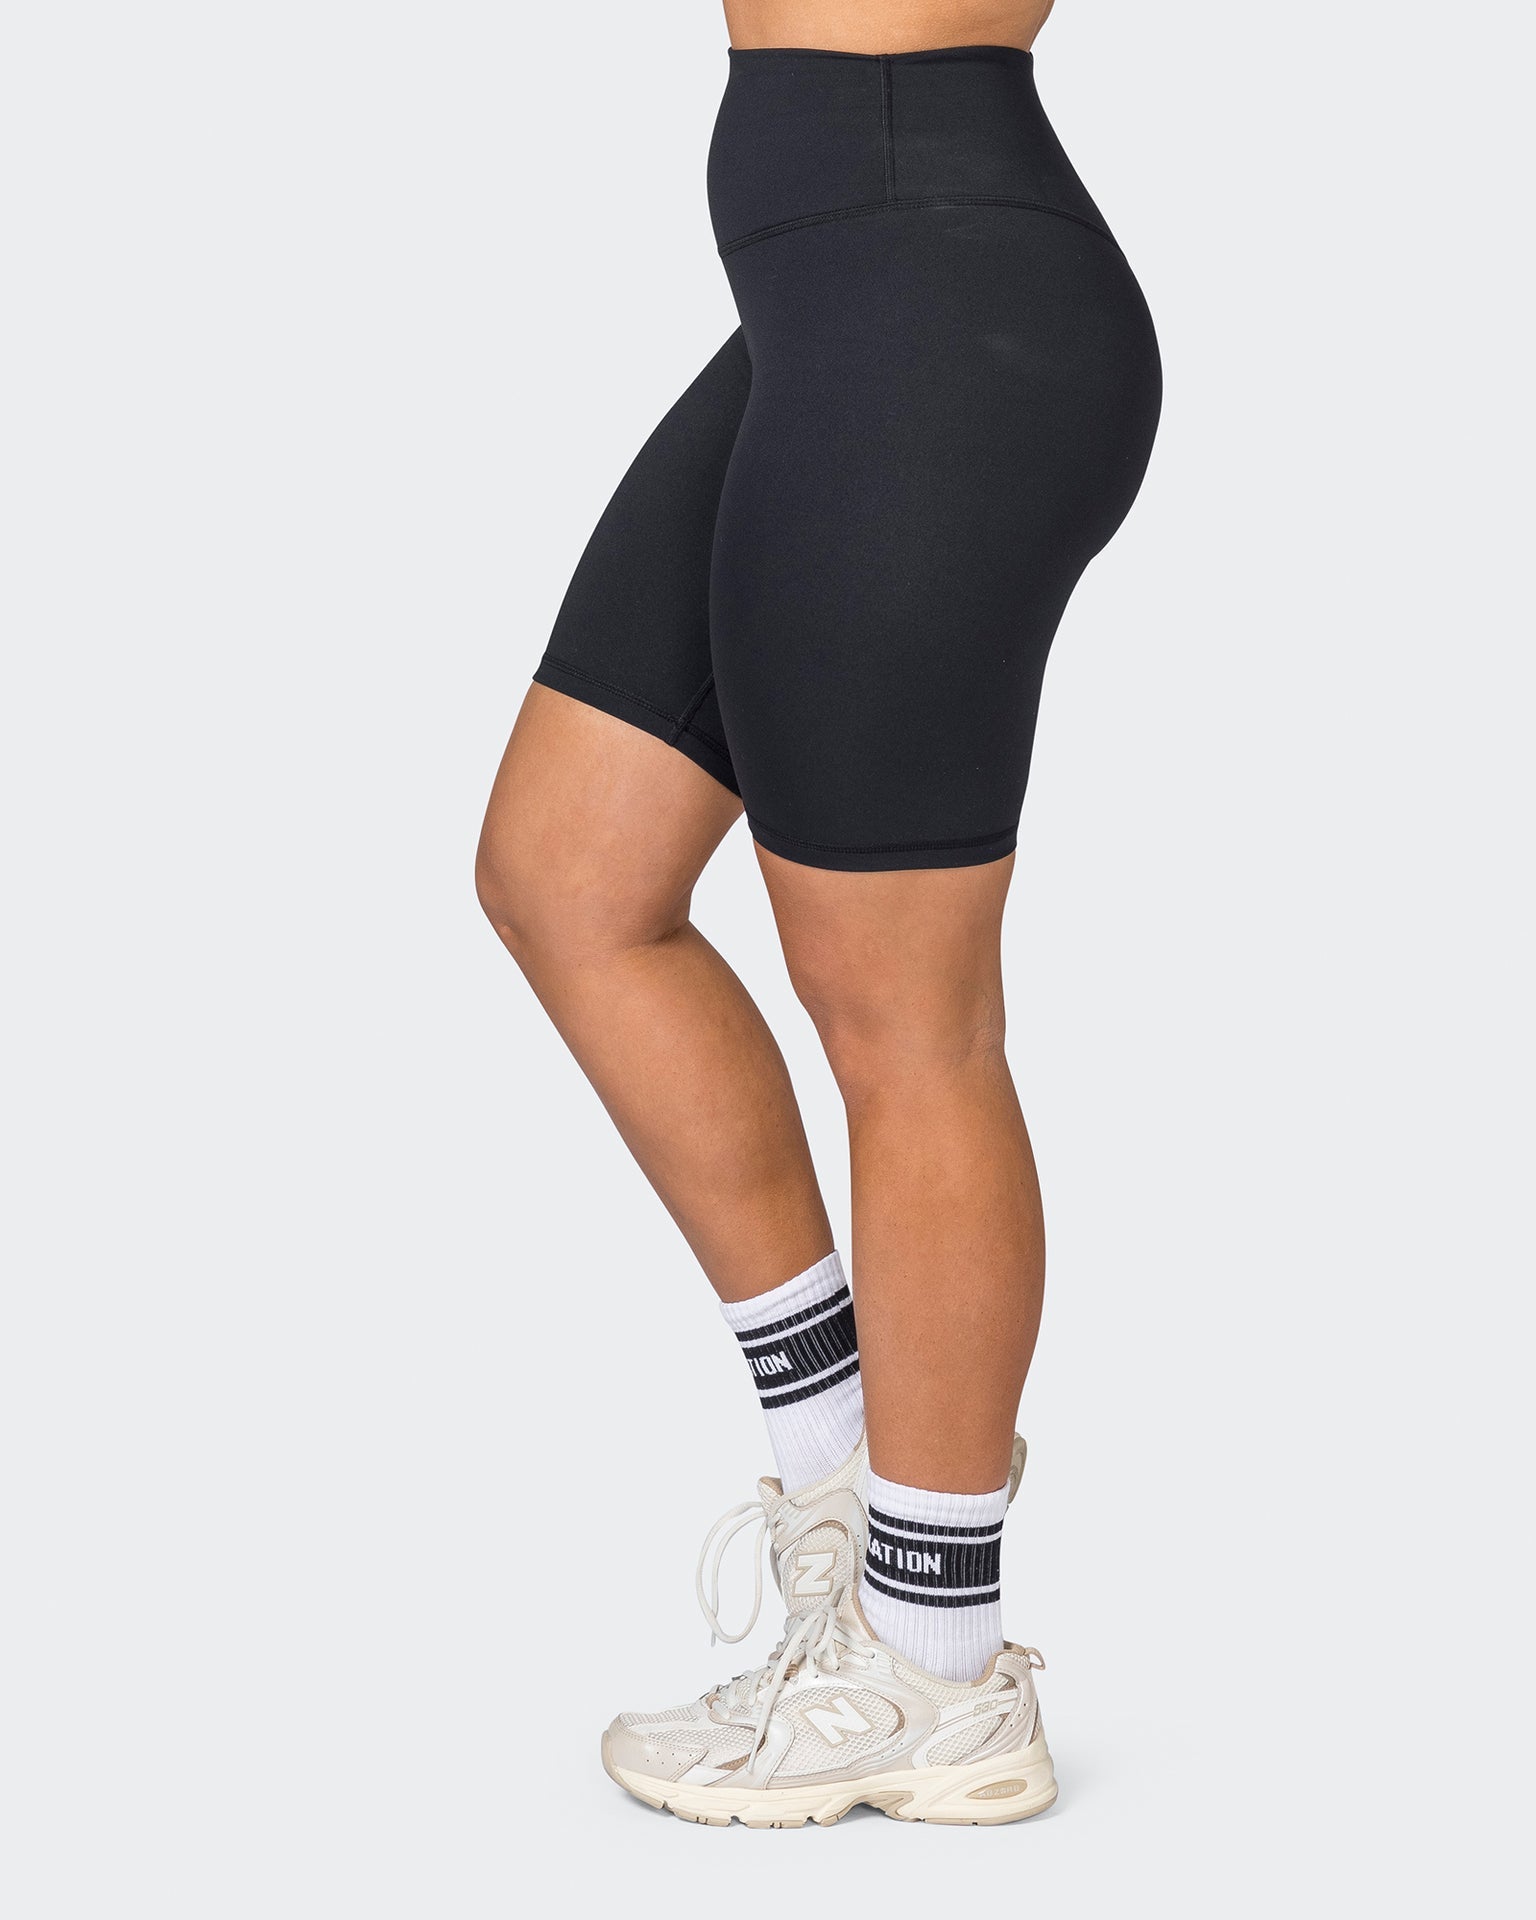 Muscle Nation Bike Shorts Ultra Signature Referee Length Shorts - Black